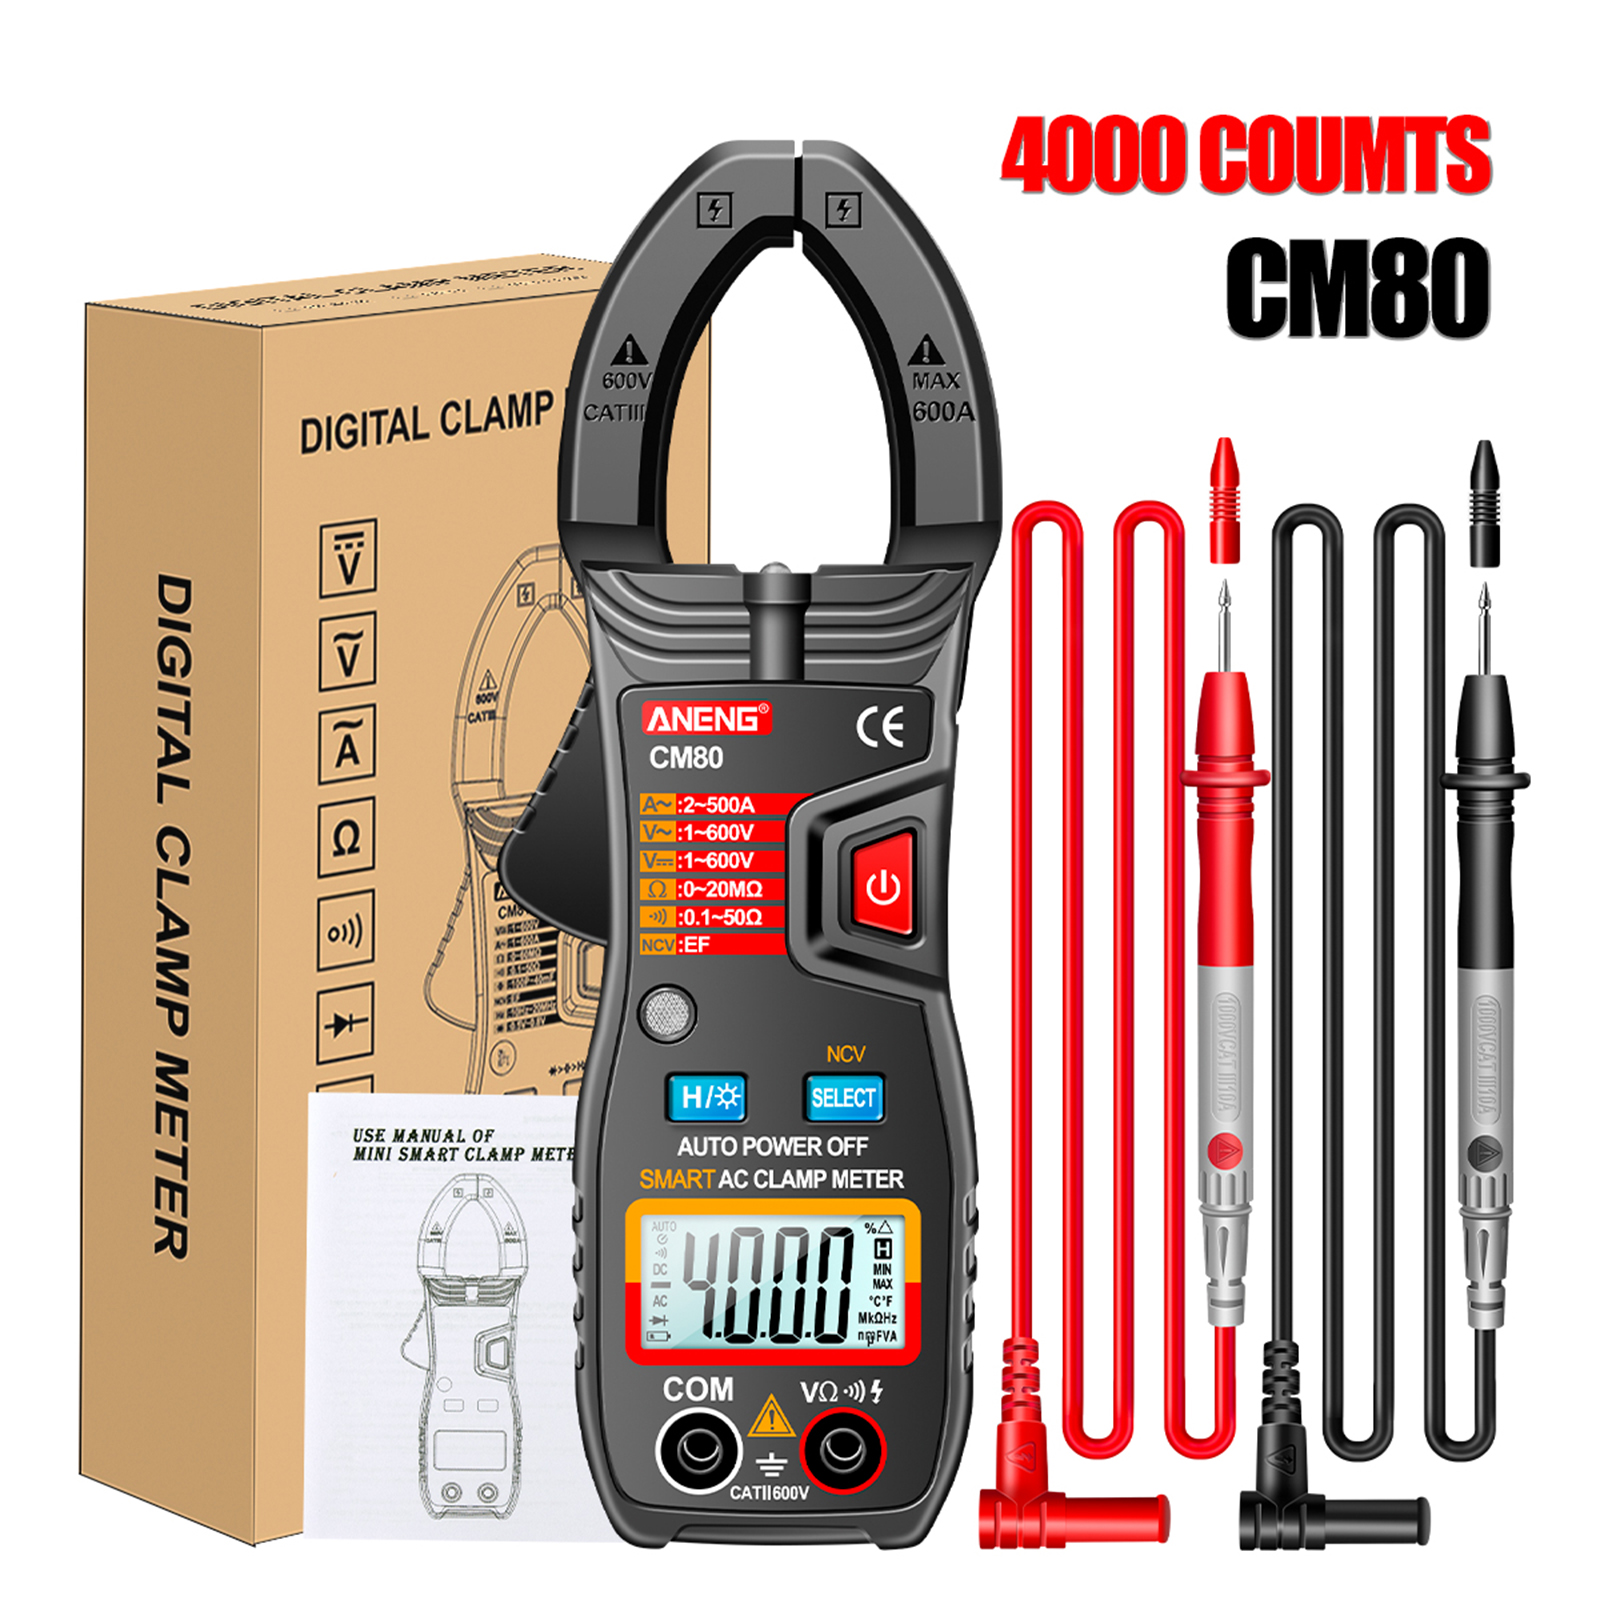 ANENG CM80 Digital Clamp Meter 4000 Counts AC/DC Voltage AC Current NCV Black